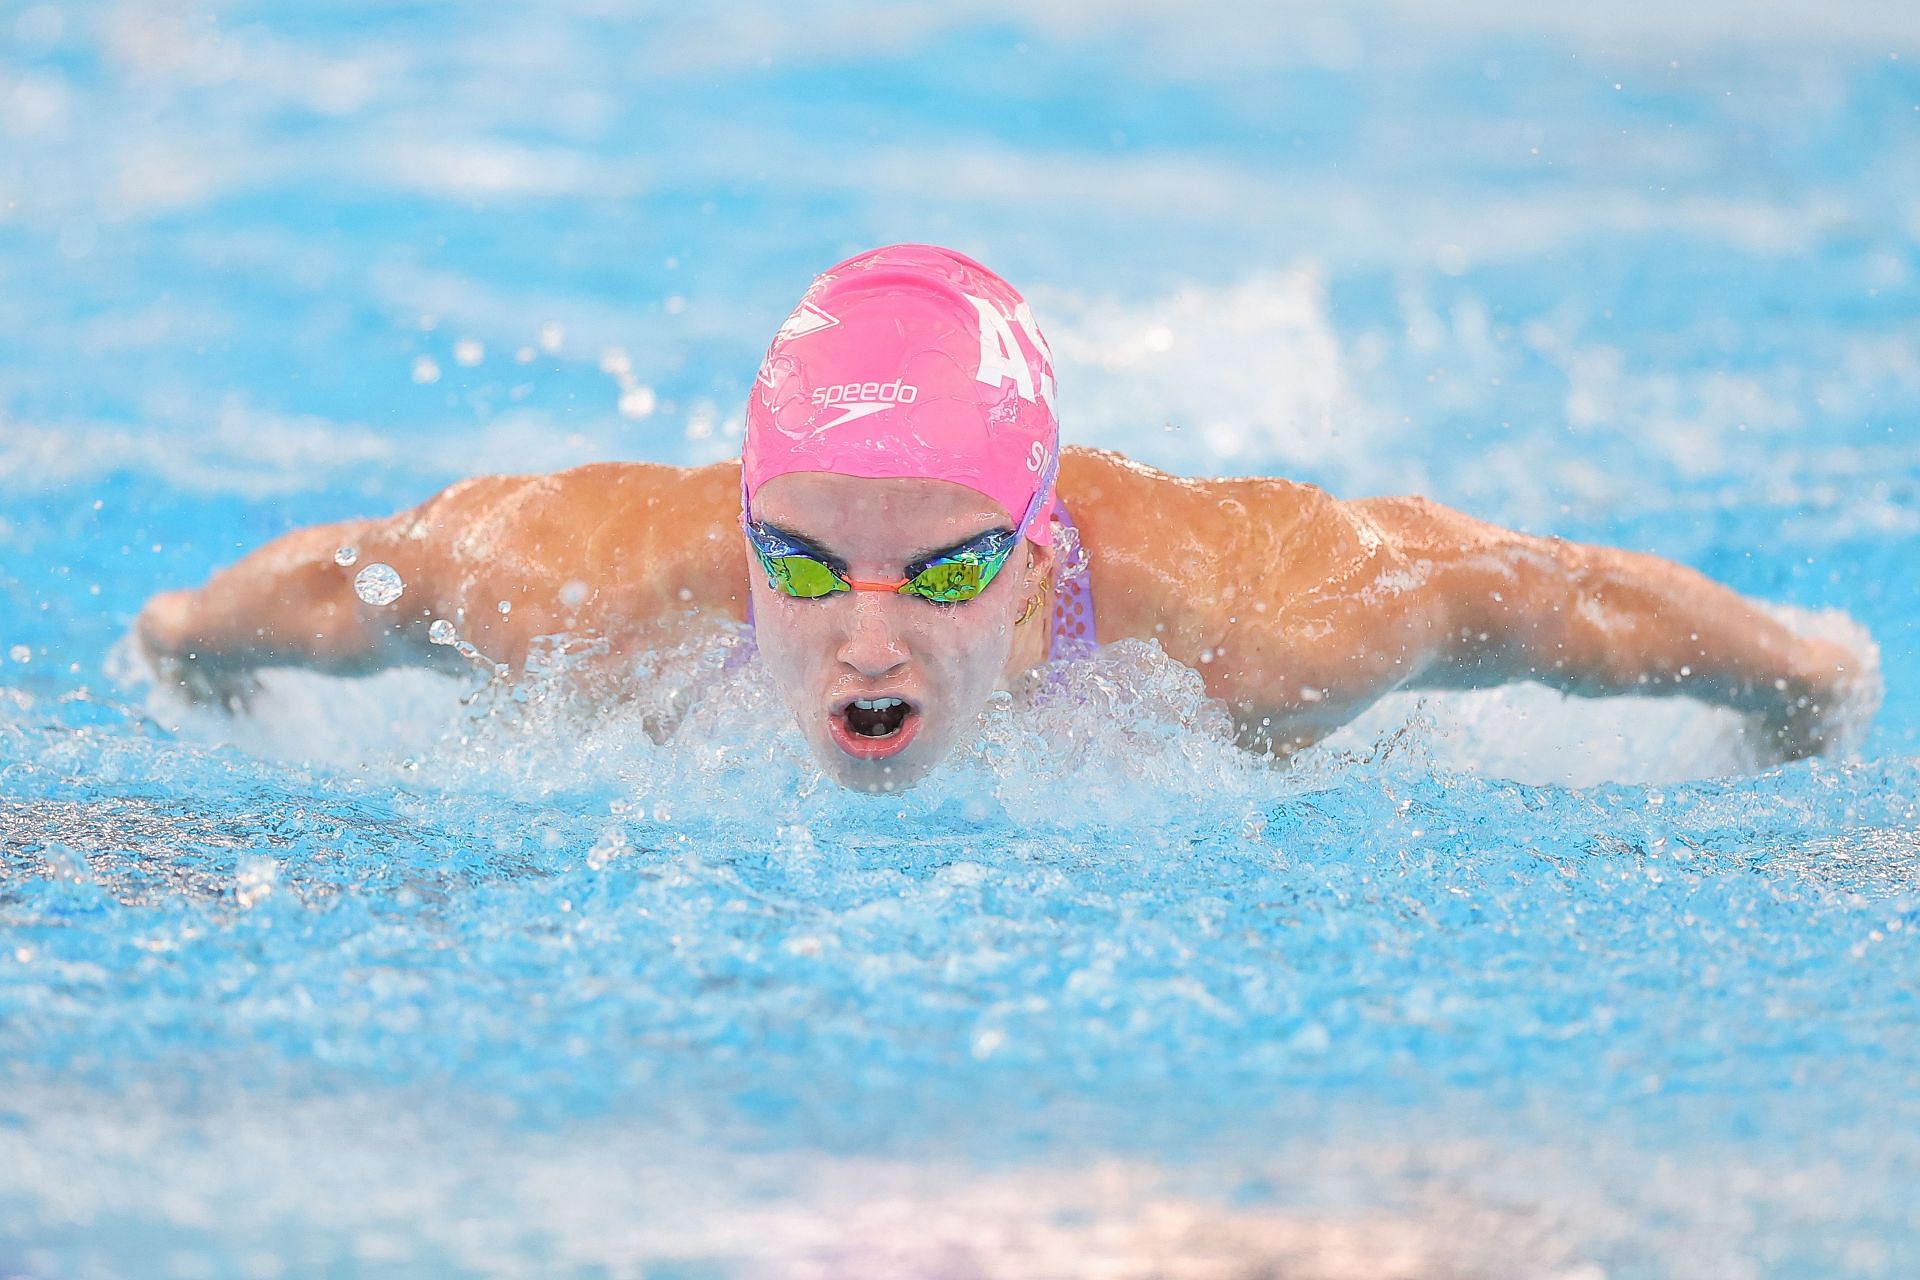 Regan Smith takes lead on USA Swimming Pro Swim Series by earning big